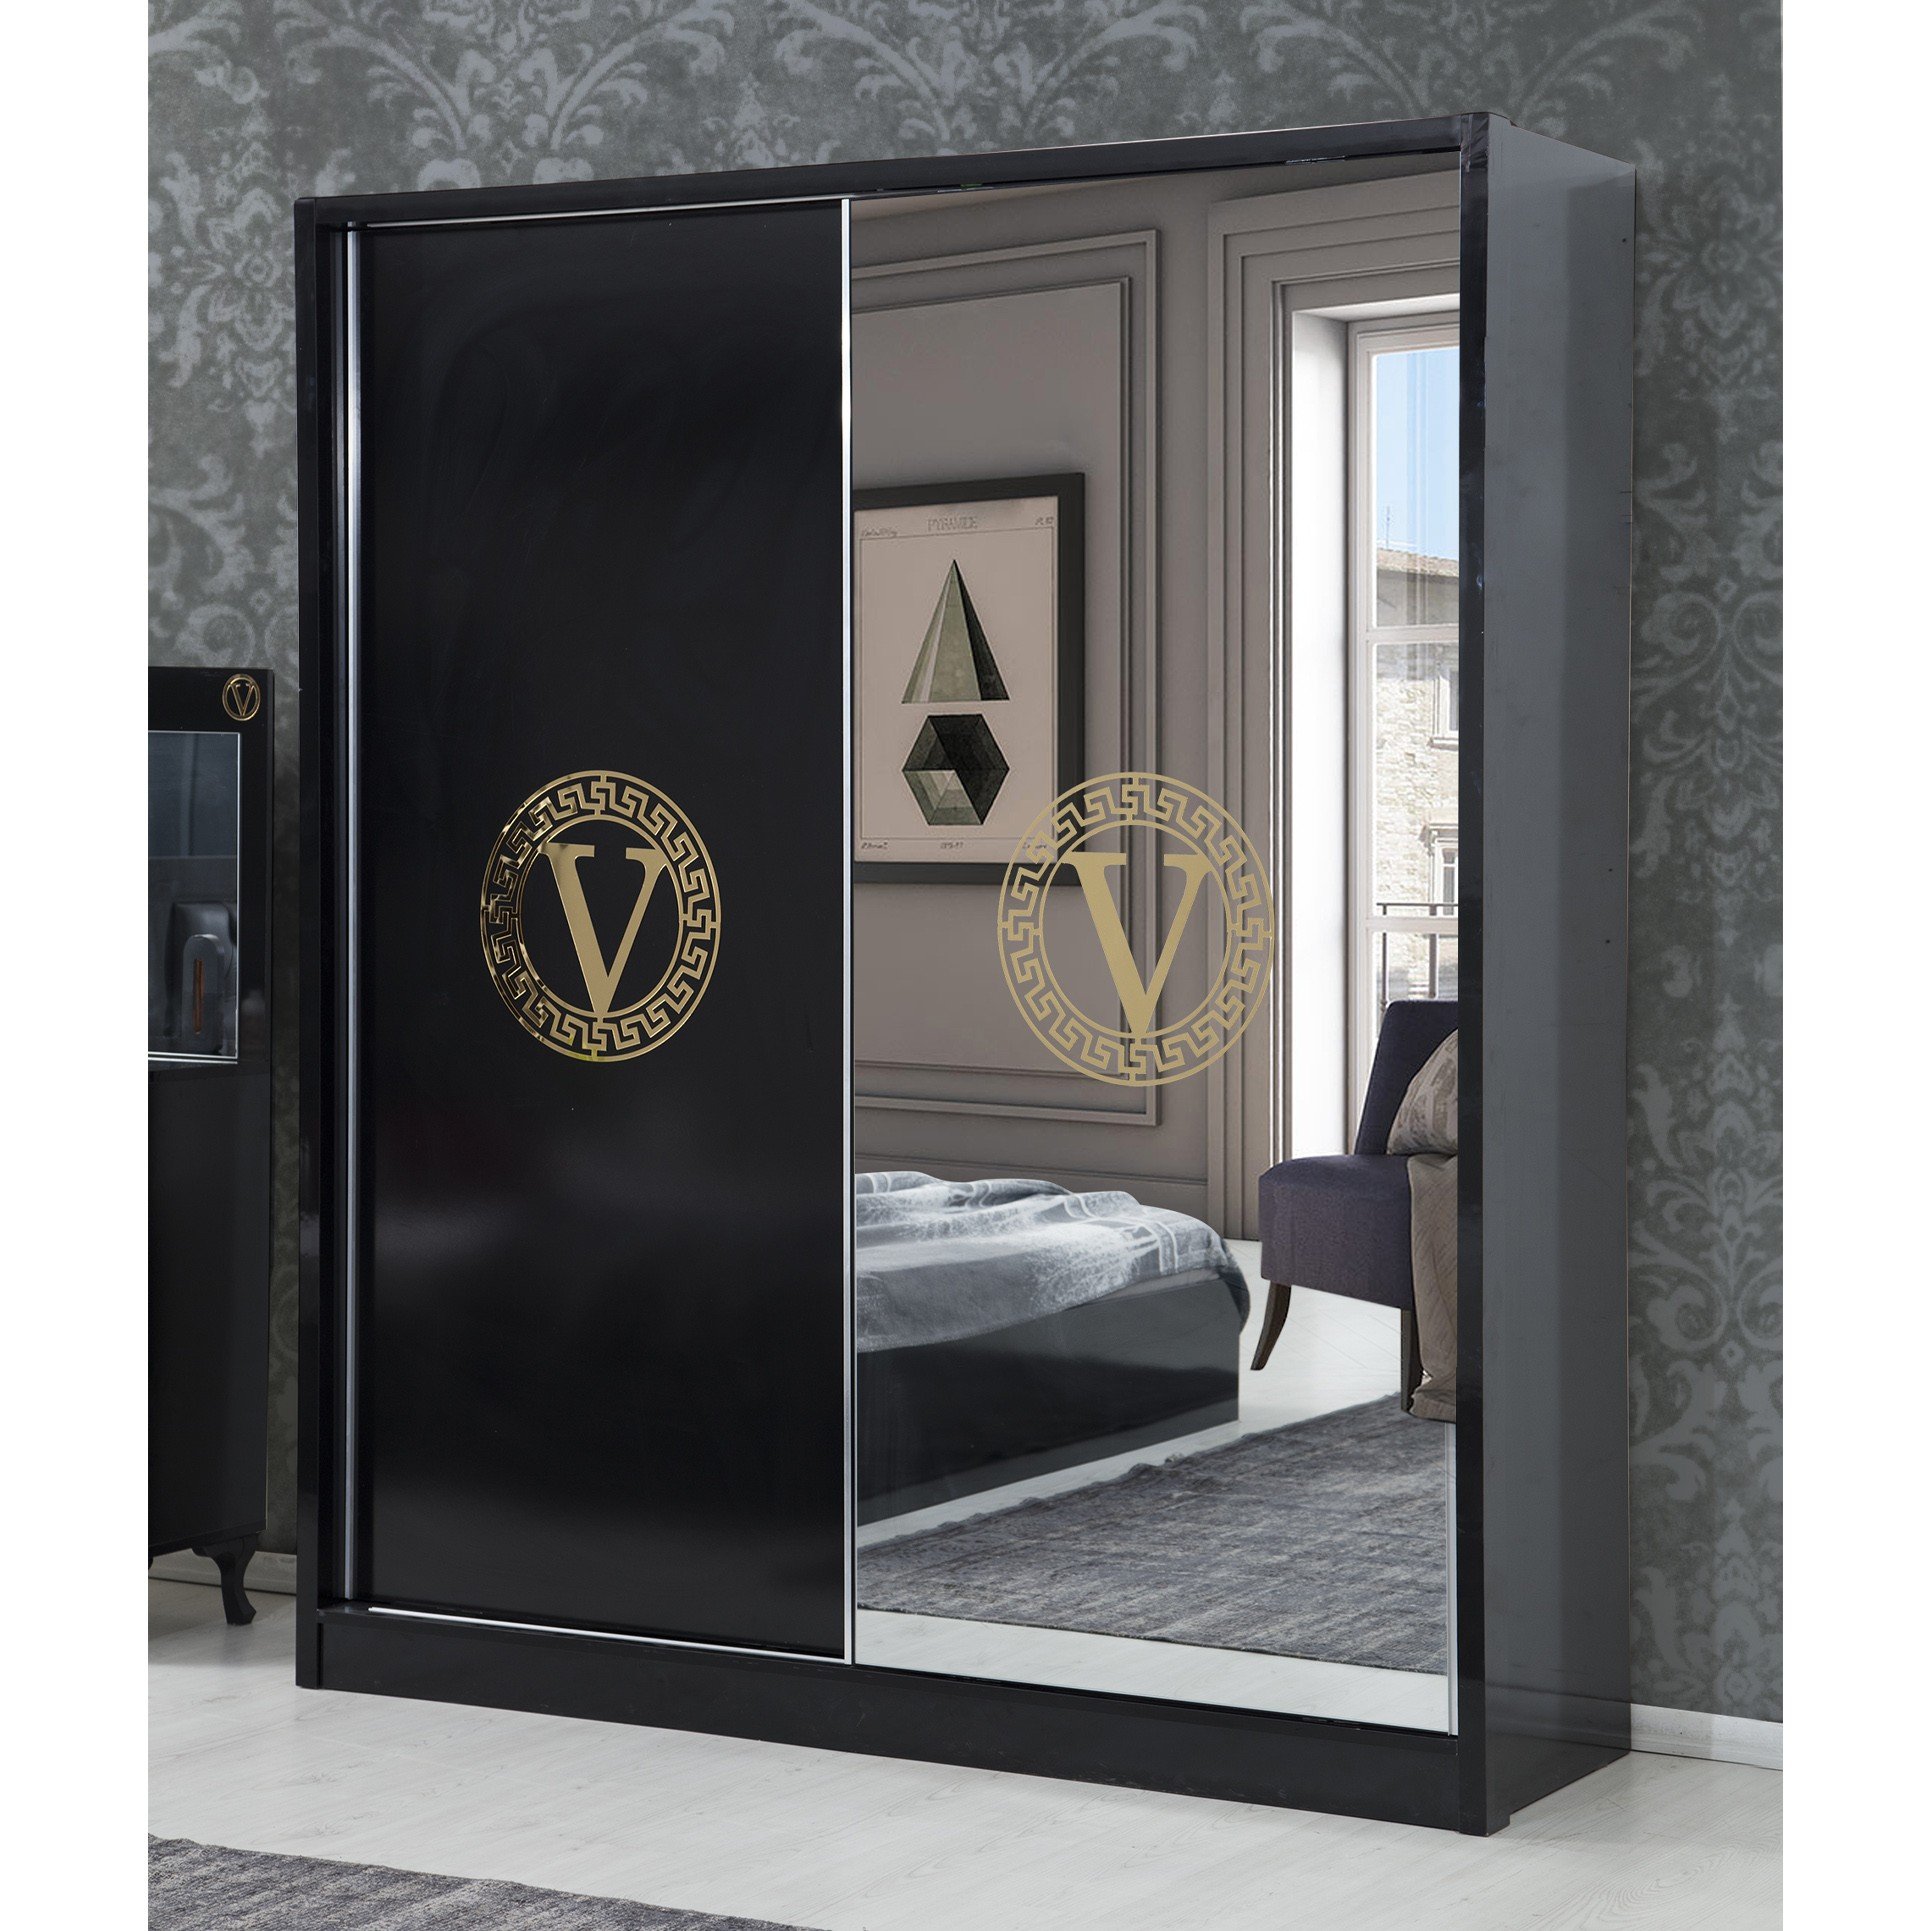 New Versace Bedroom with 180cm Wardrobe